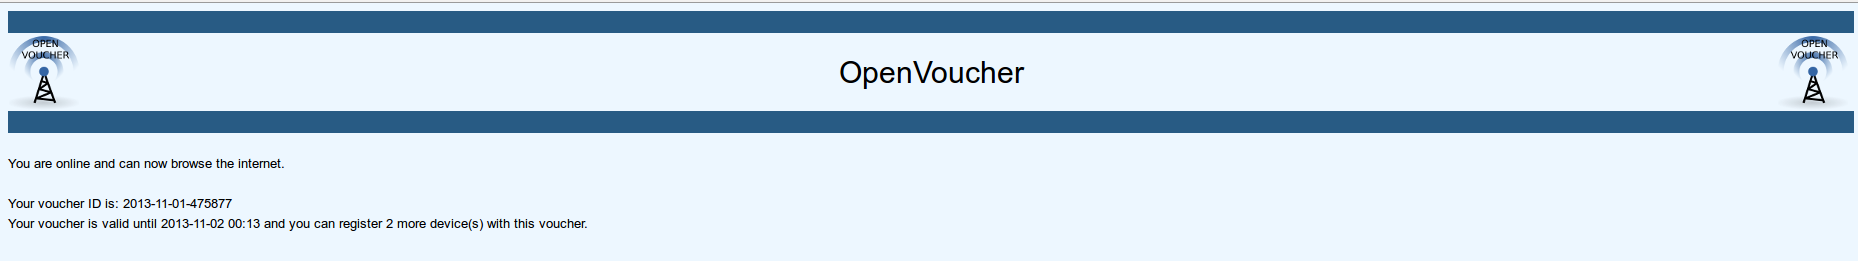 Download web tool or web app OpenVoucher